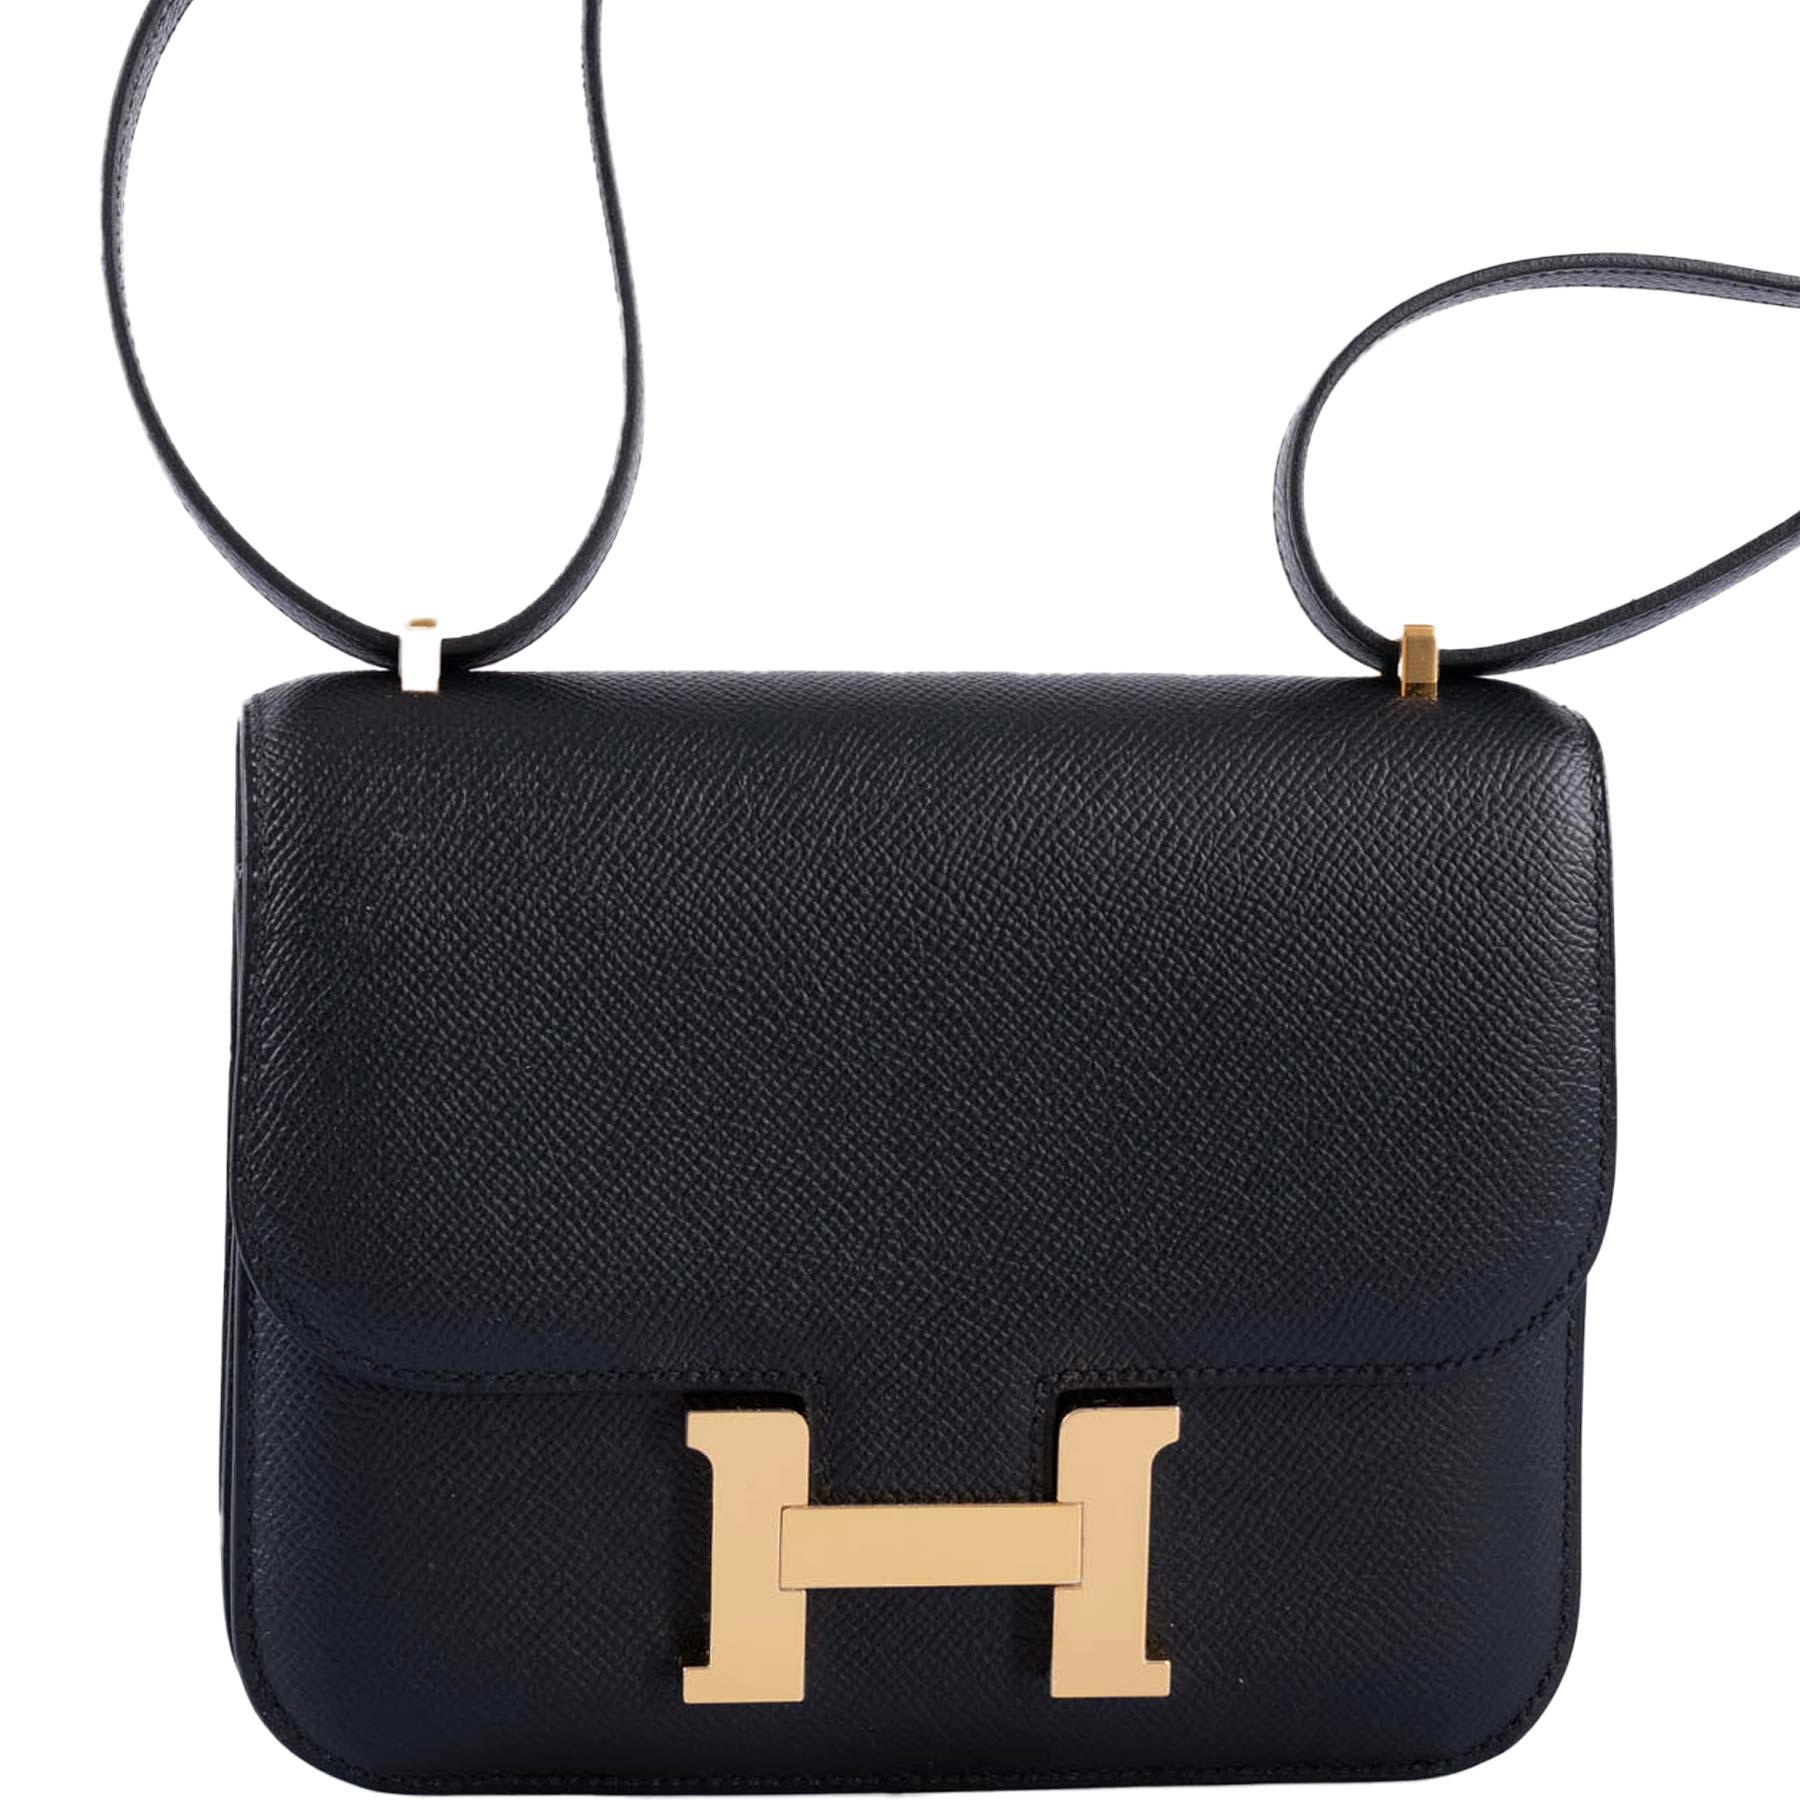 Hermès Constance Mini 18cm Black Epsom Gold Hardware – Coco Approved Studio